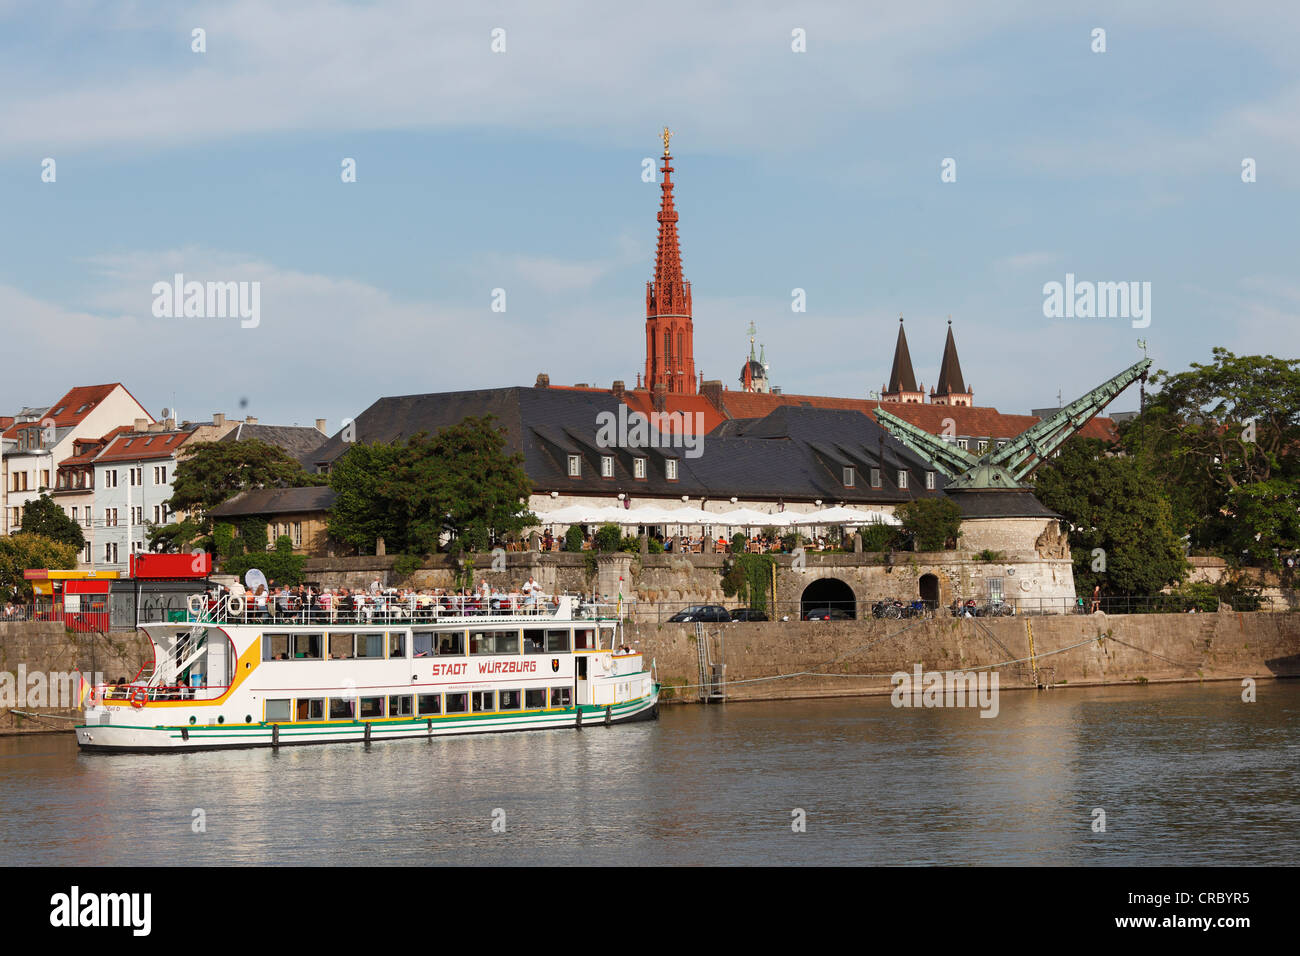 Ship on the Main River, Alter Kranen crane, steeple of Marienkirche Church, Wuerzburg, Lower Franconia, Franconia, Bavaria Stock Photo